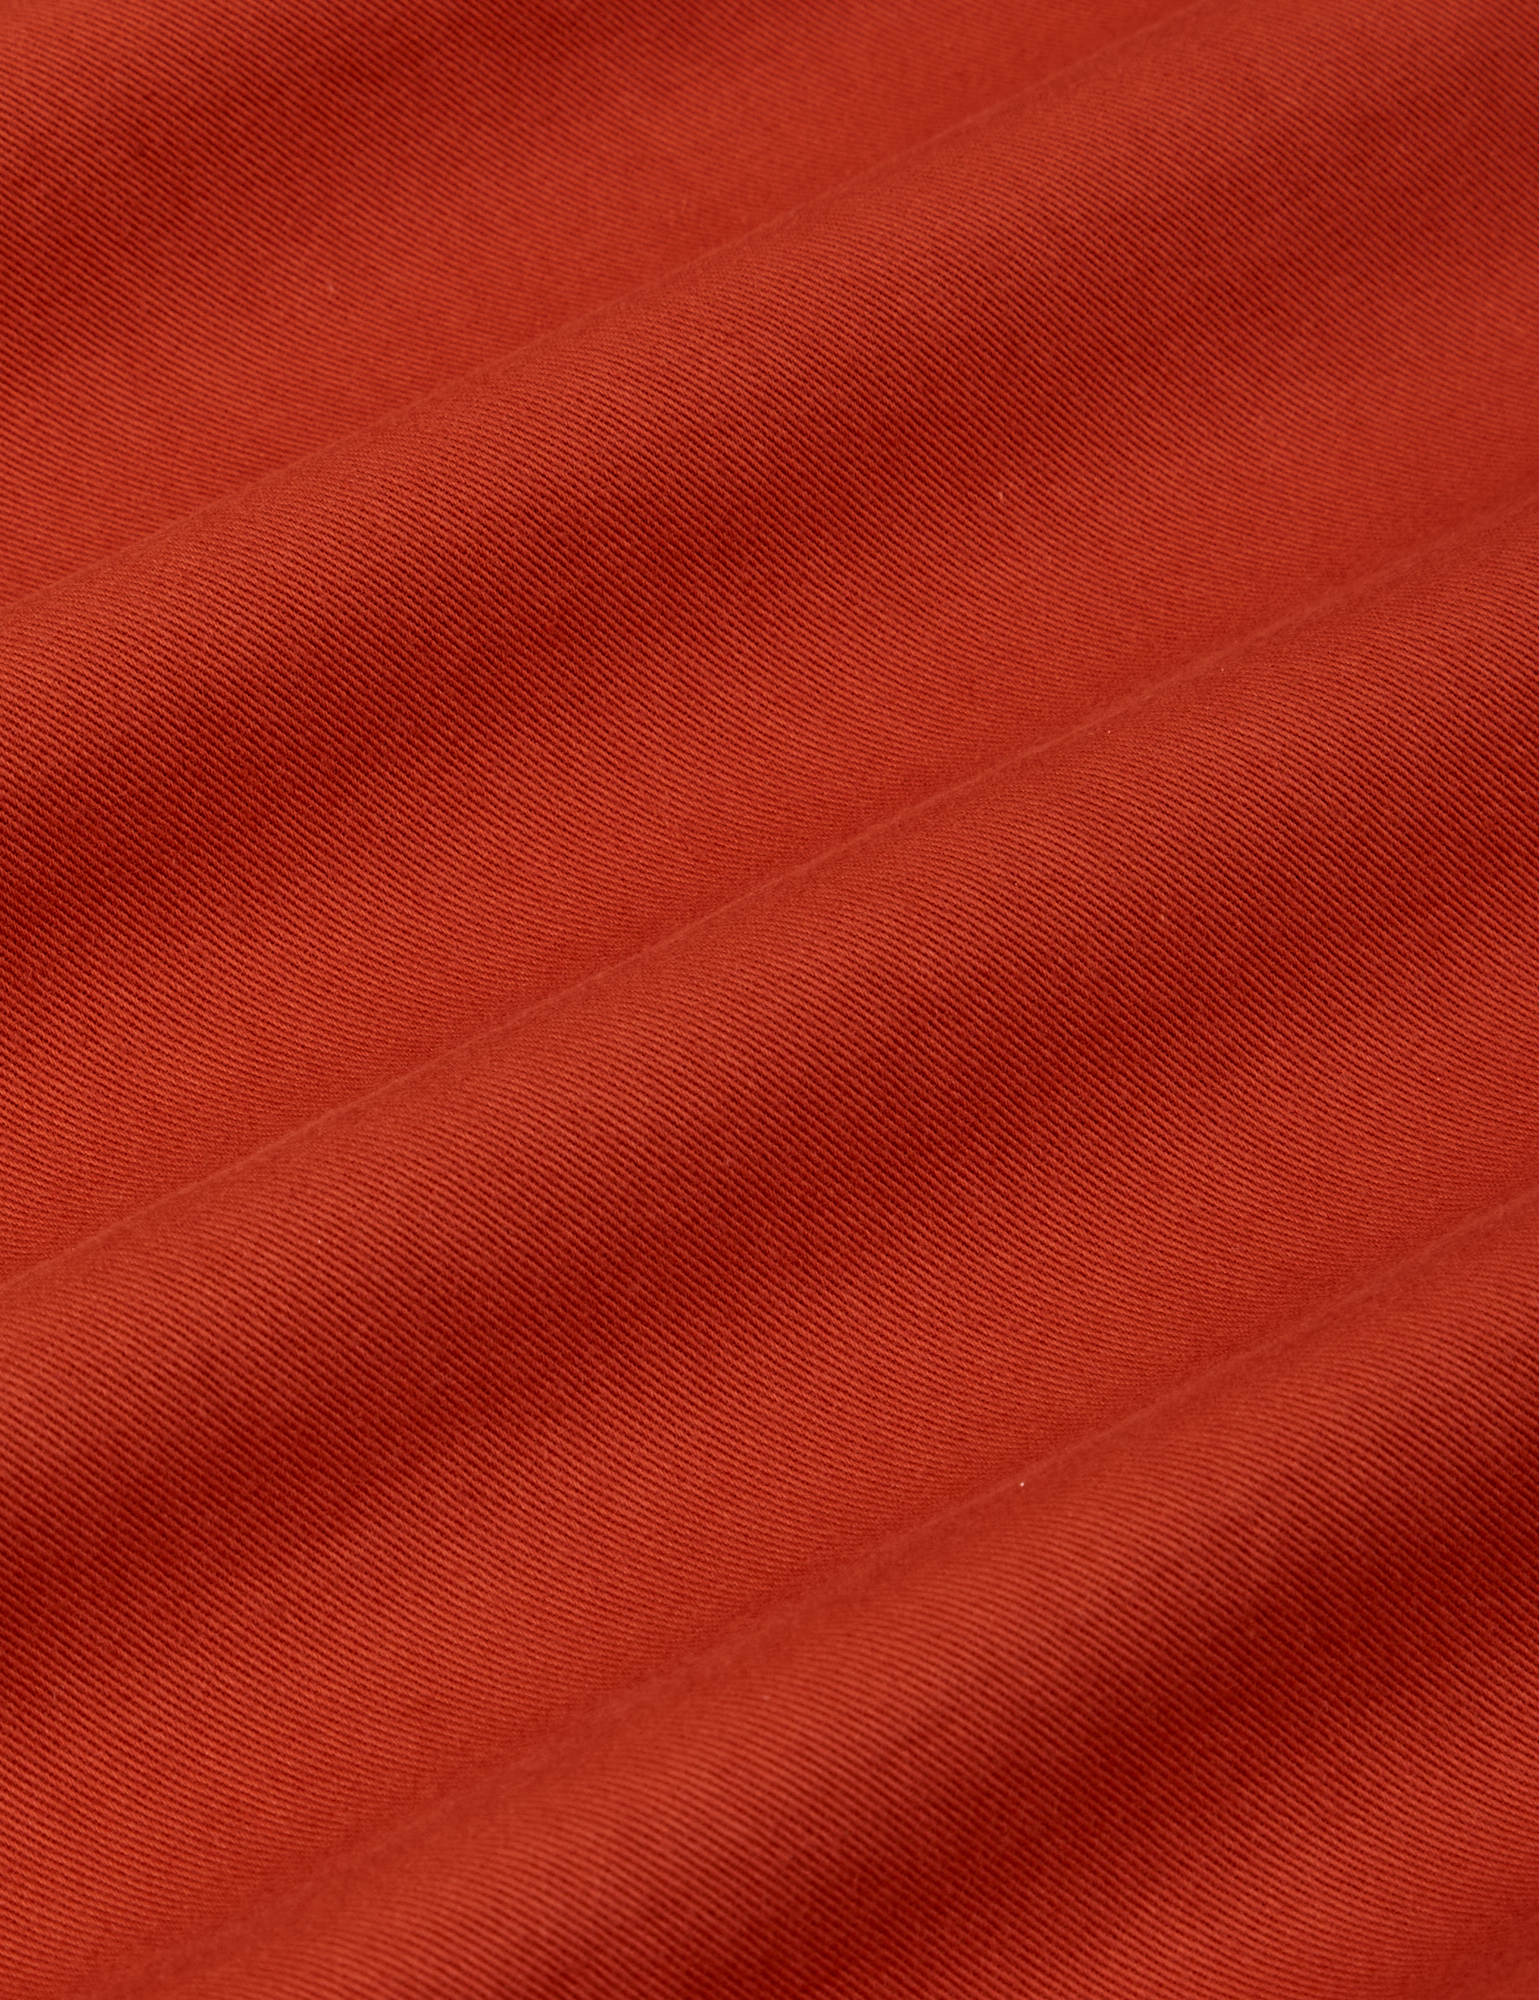 Oversize Overshirt in Paprika fabric detail close up